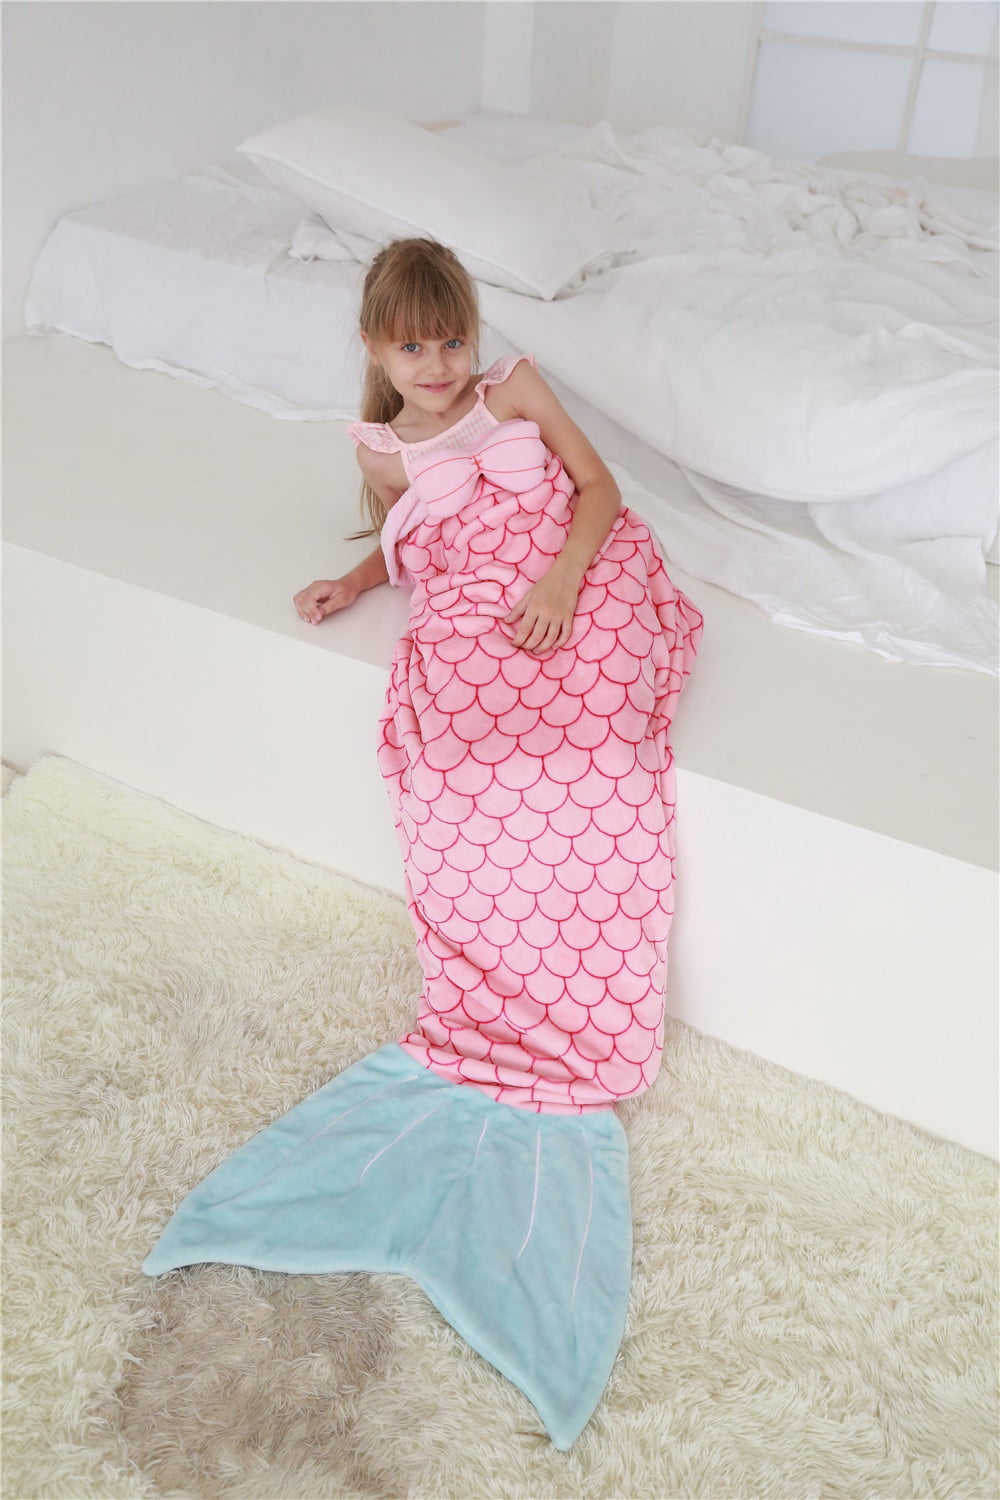 Plush Animal Sleeping Bag Blanket Shark Toys for Kids by SINOGEM Shark Tail Blanket Pink 